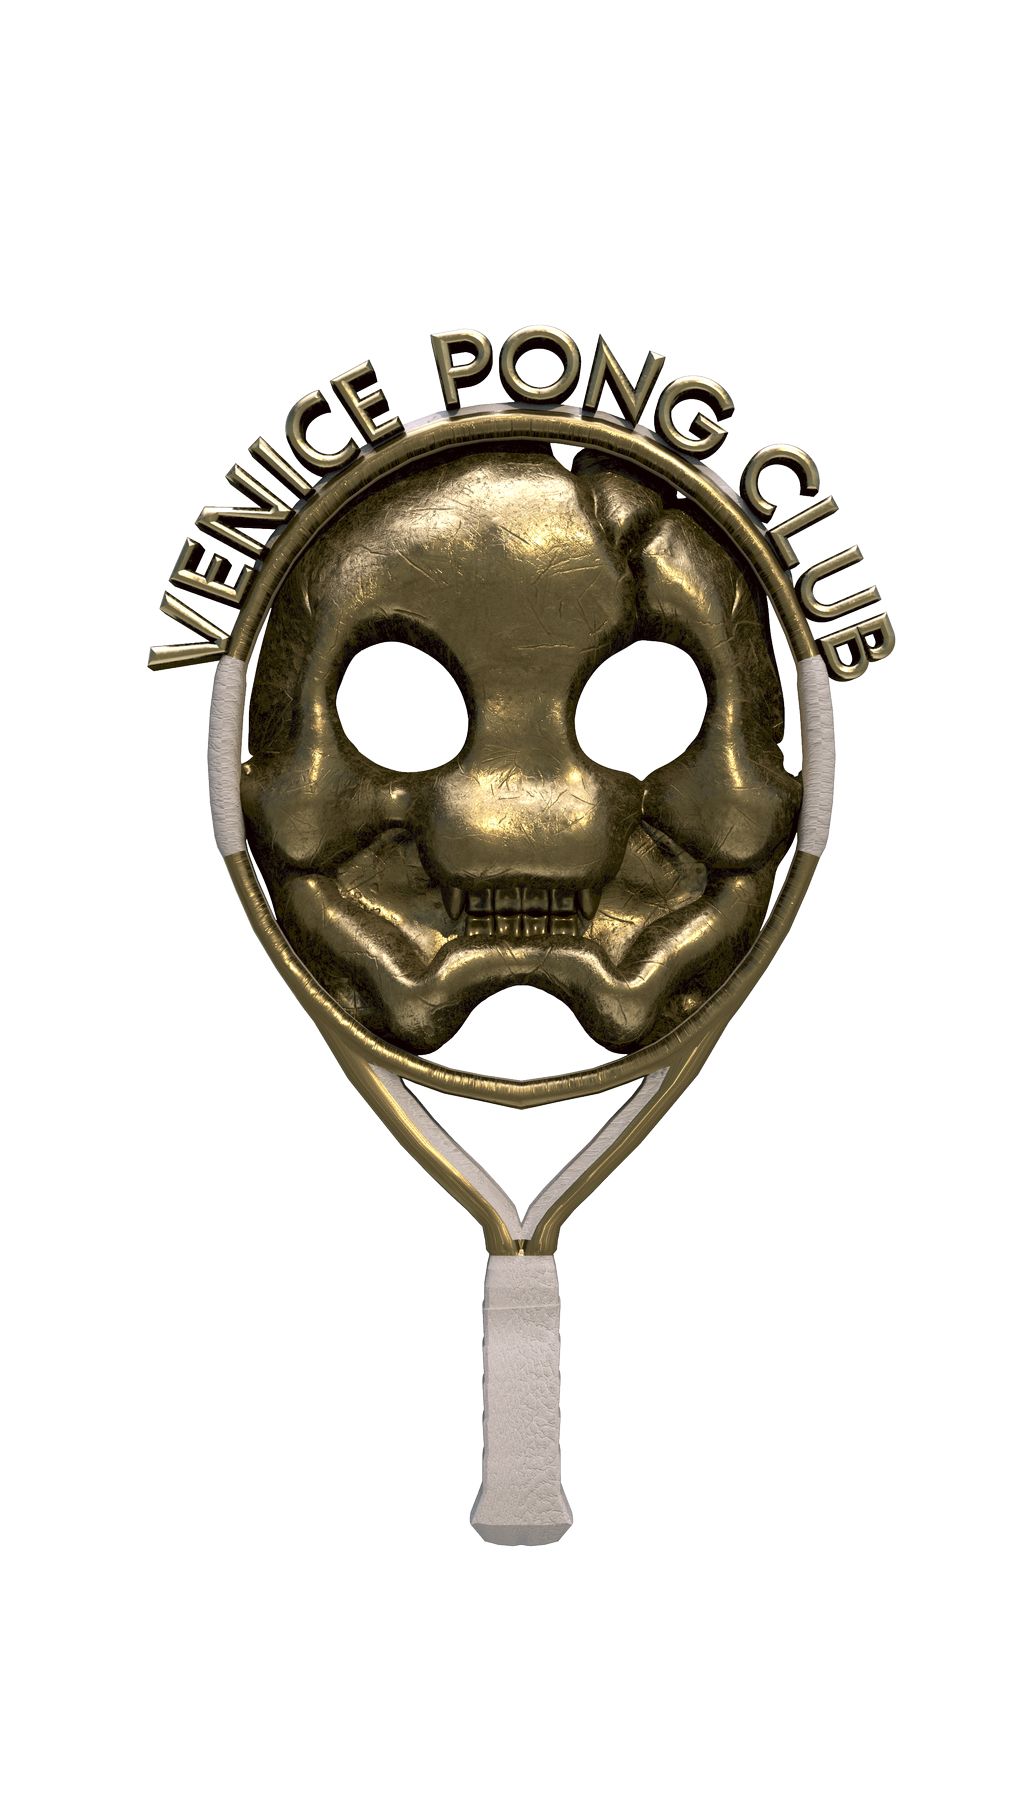 Venice Pong Club